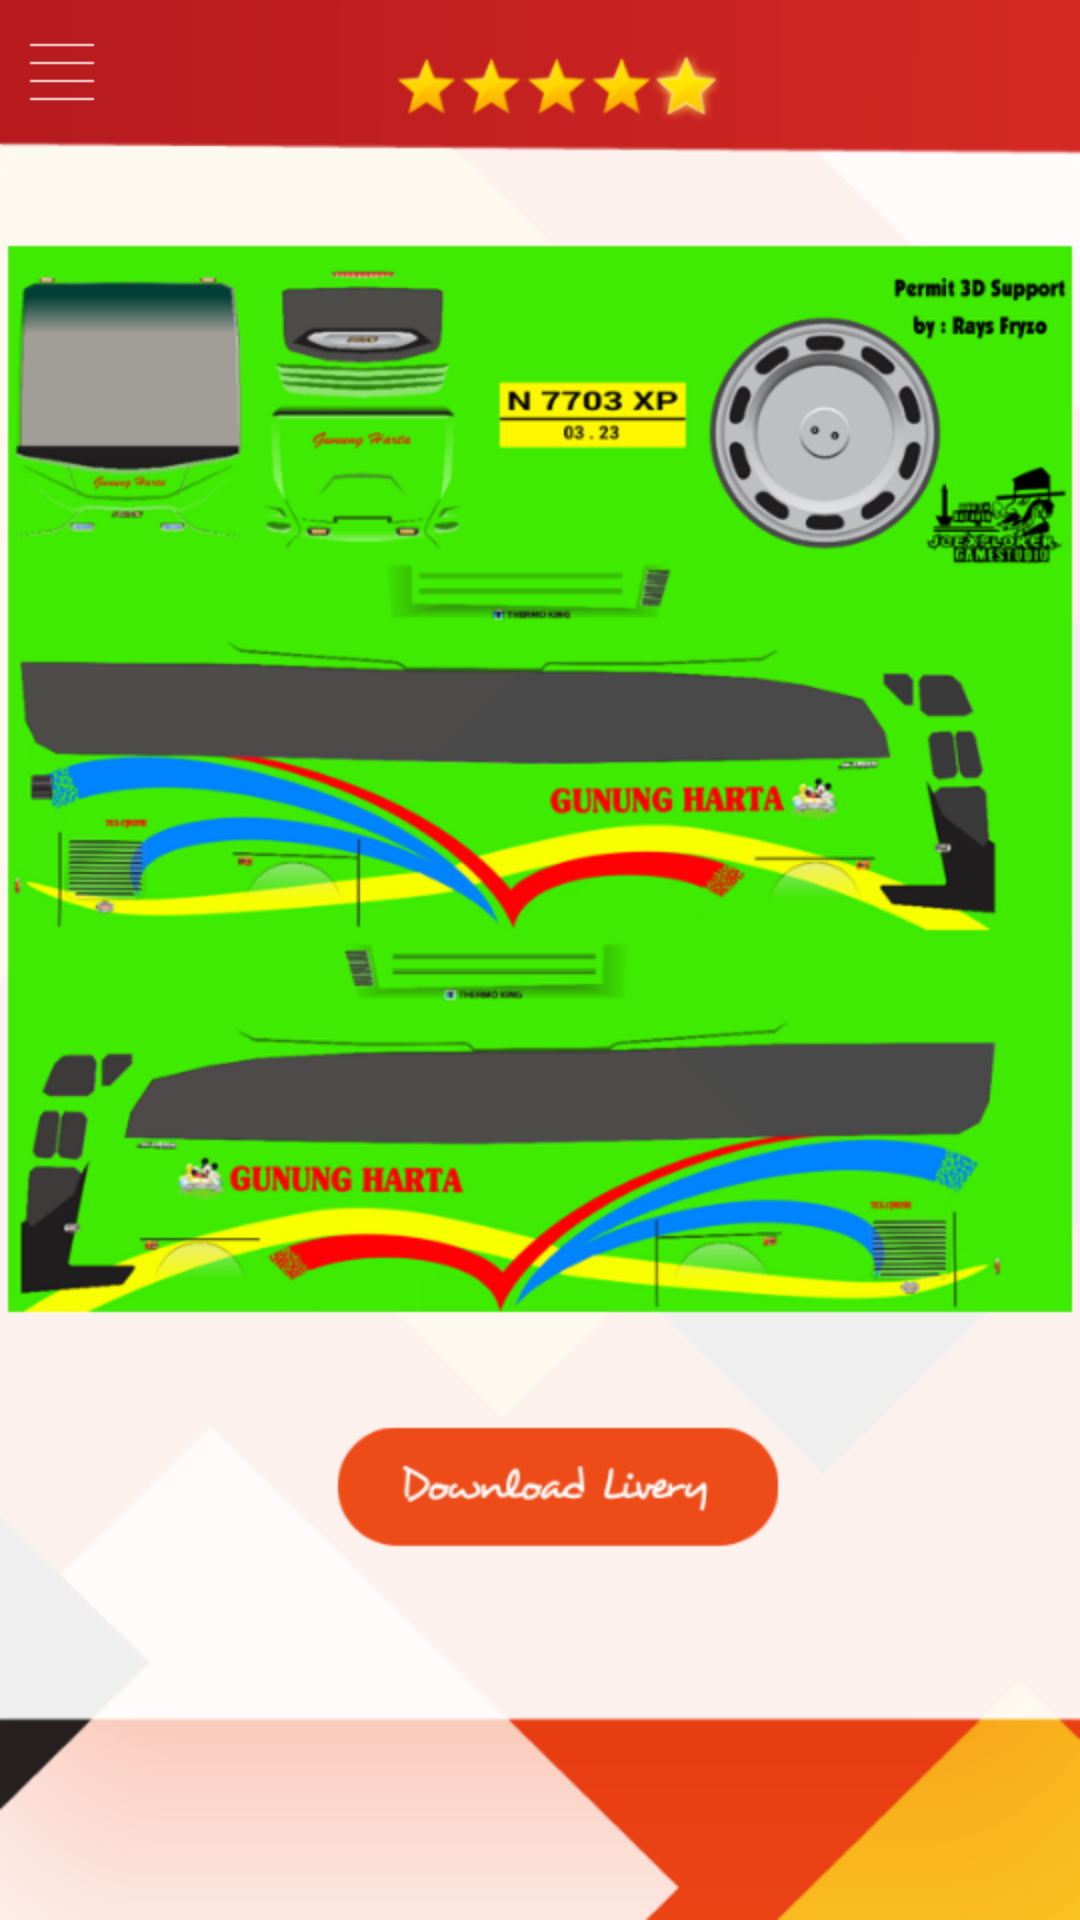 Livery Bussid Hd Complete Apk 1 4 Download For Android Download Livery Bussid Hd Complete Apk Latest Version Apkfab Com